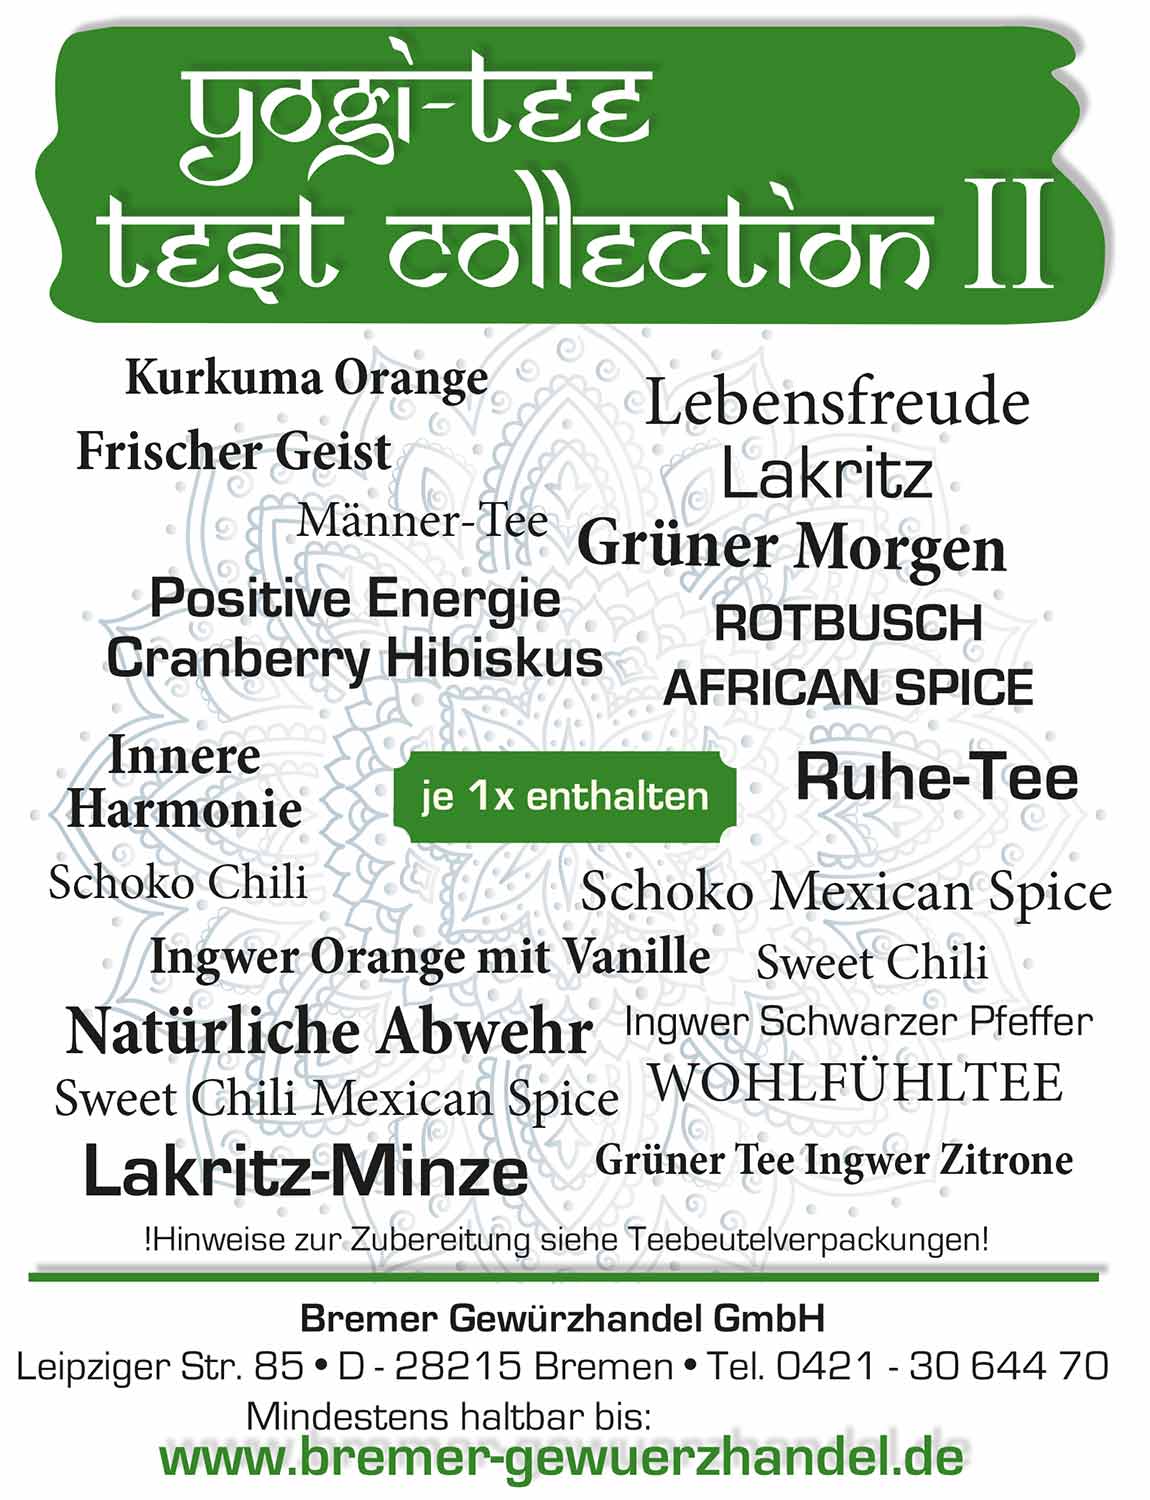 Yogi Tee Test Collection 2, 20 leckere Sorten, BIO 40 g